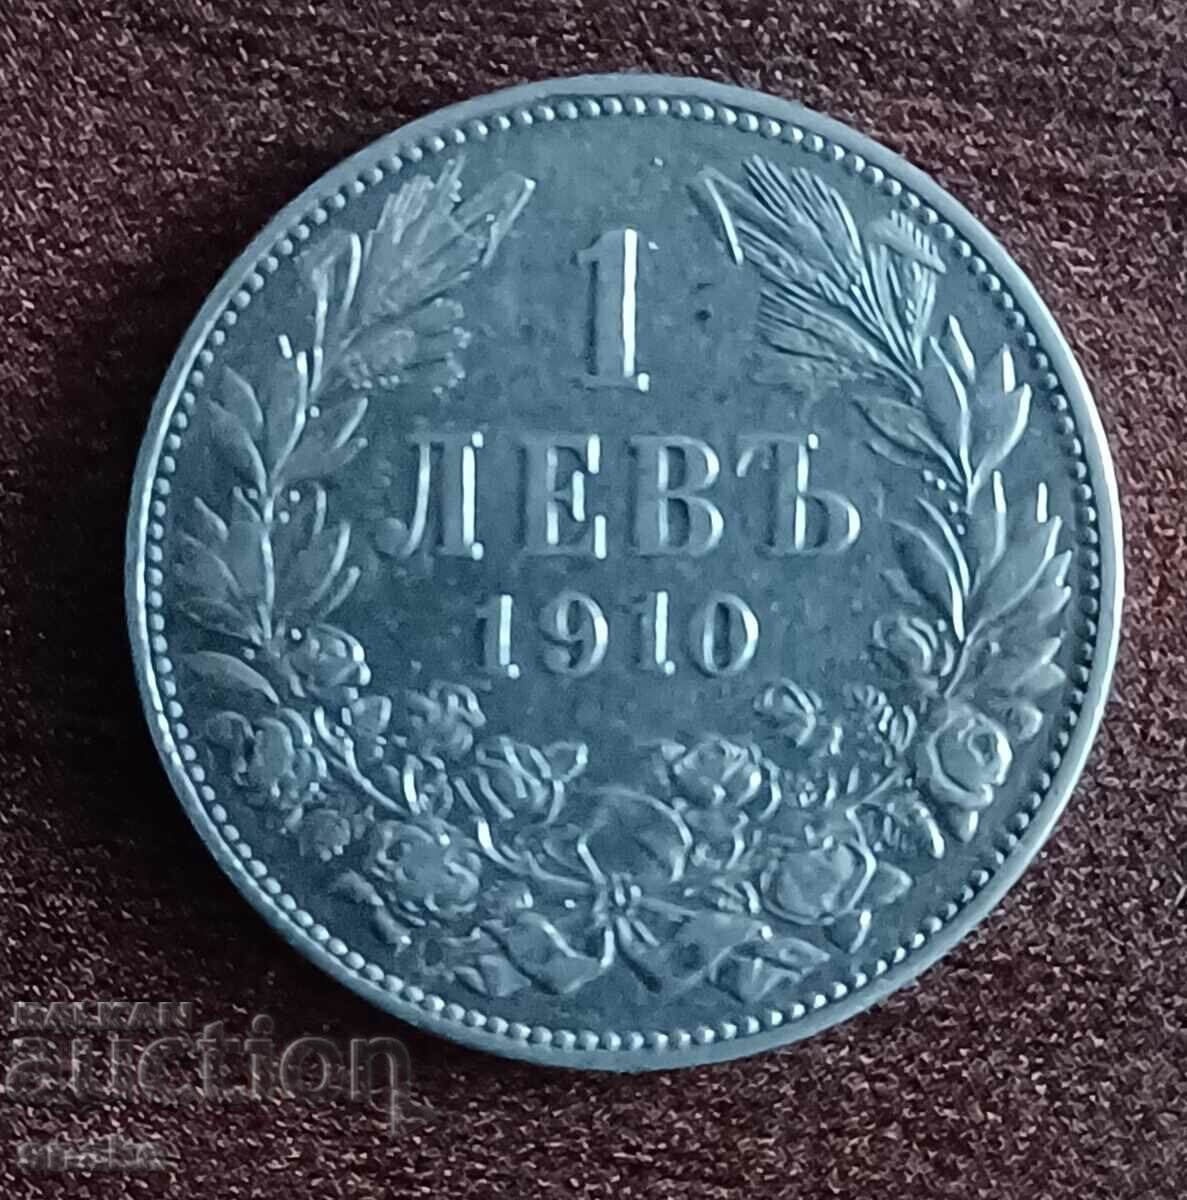 Bulgaria BGN 1 1910 Silver